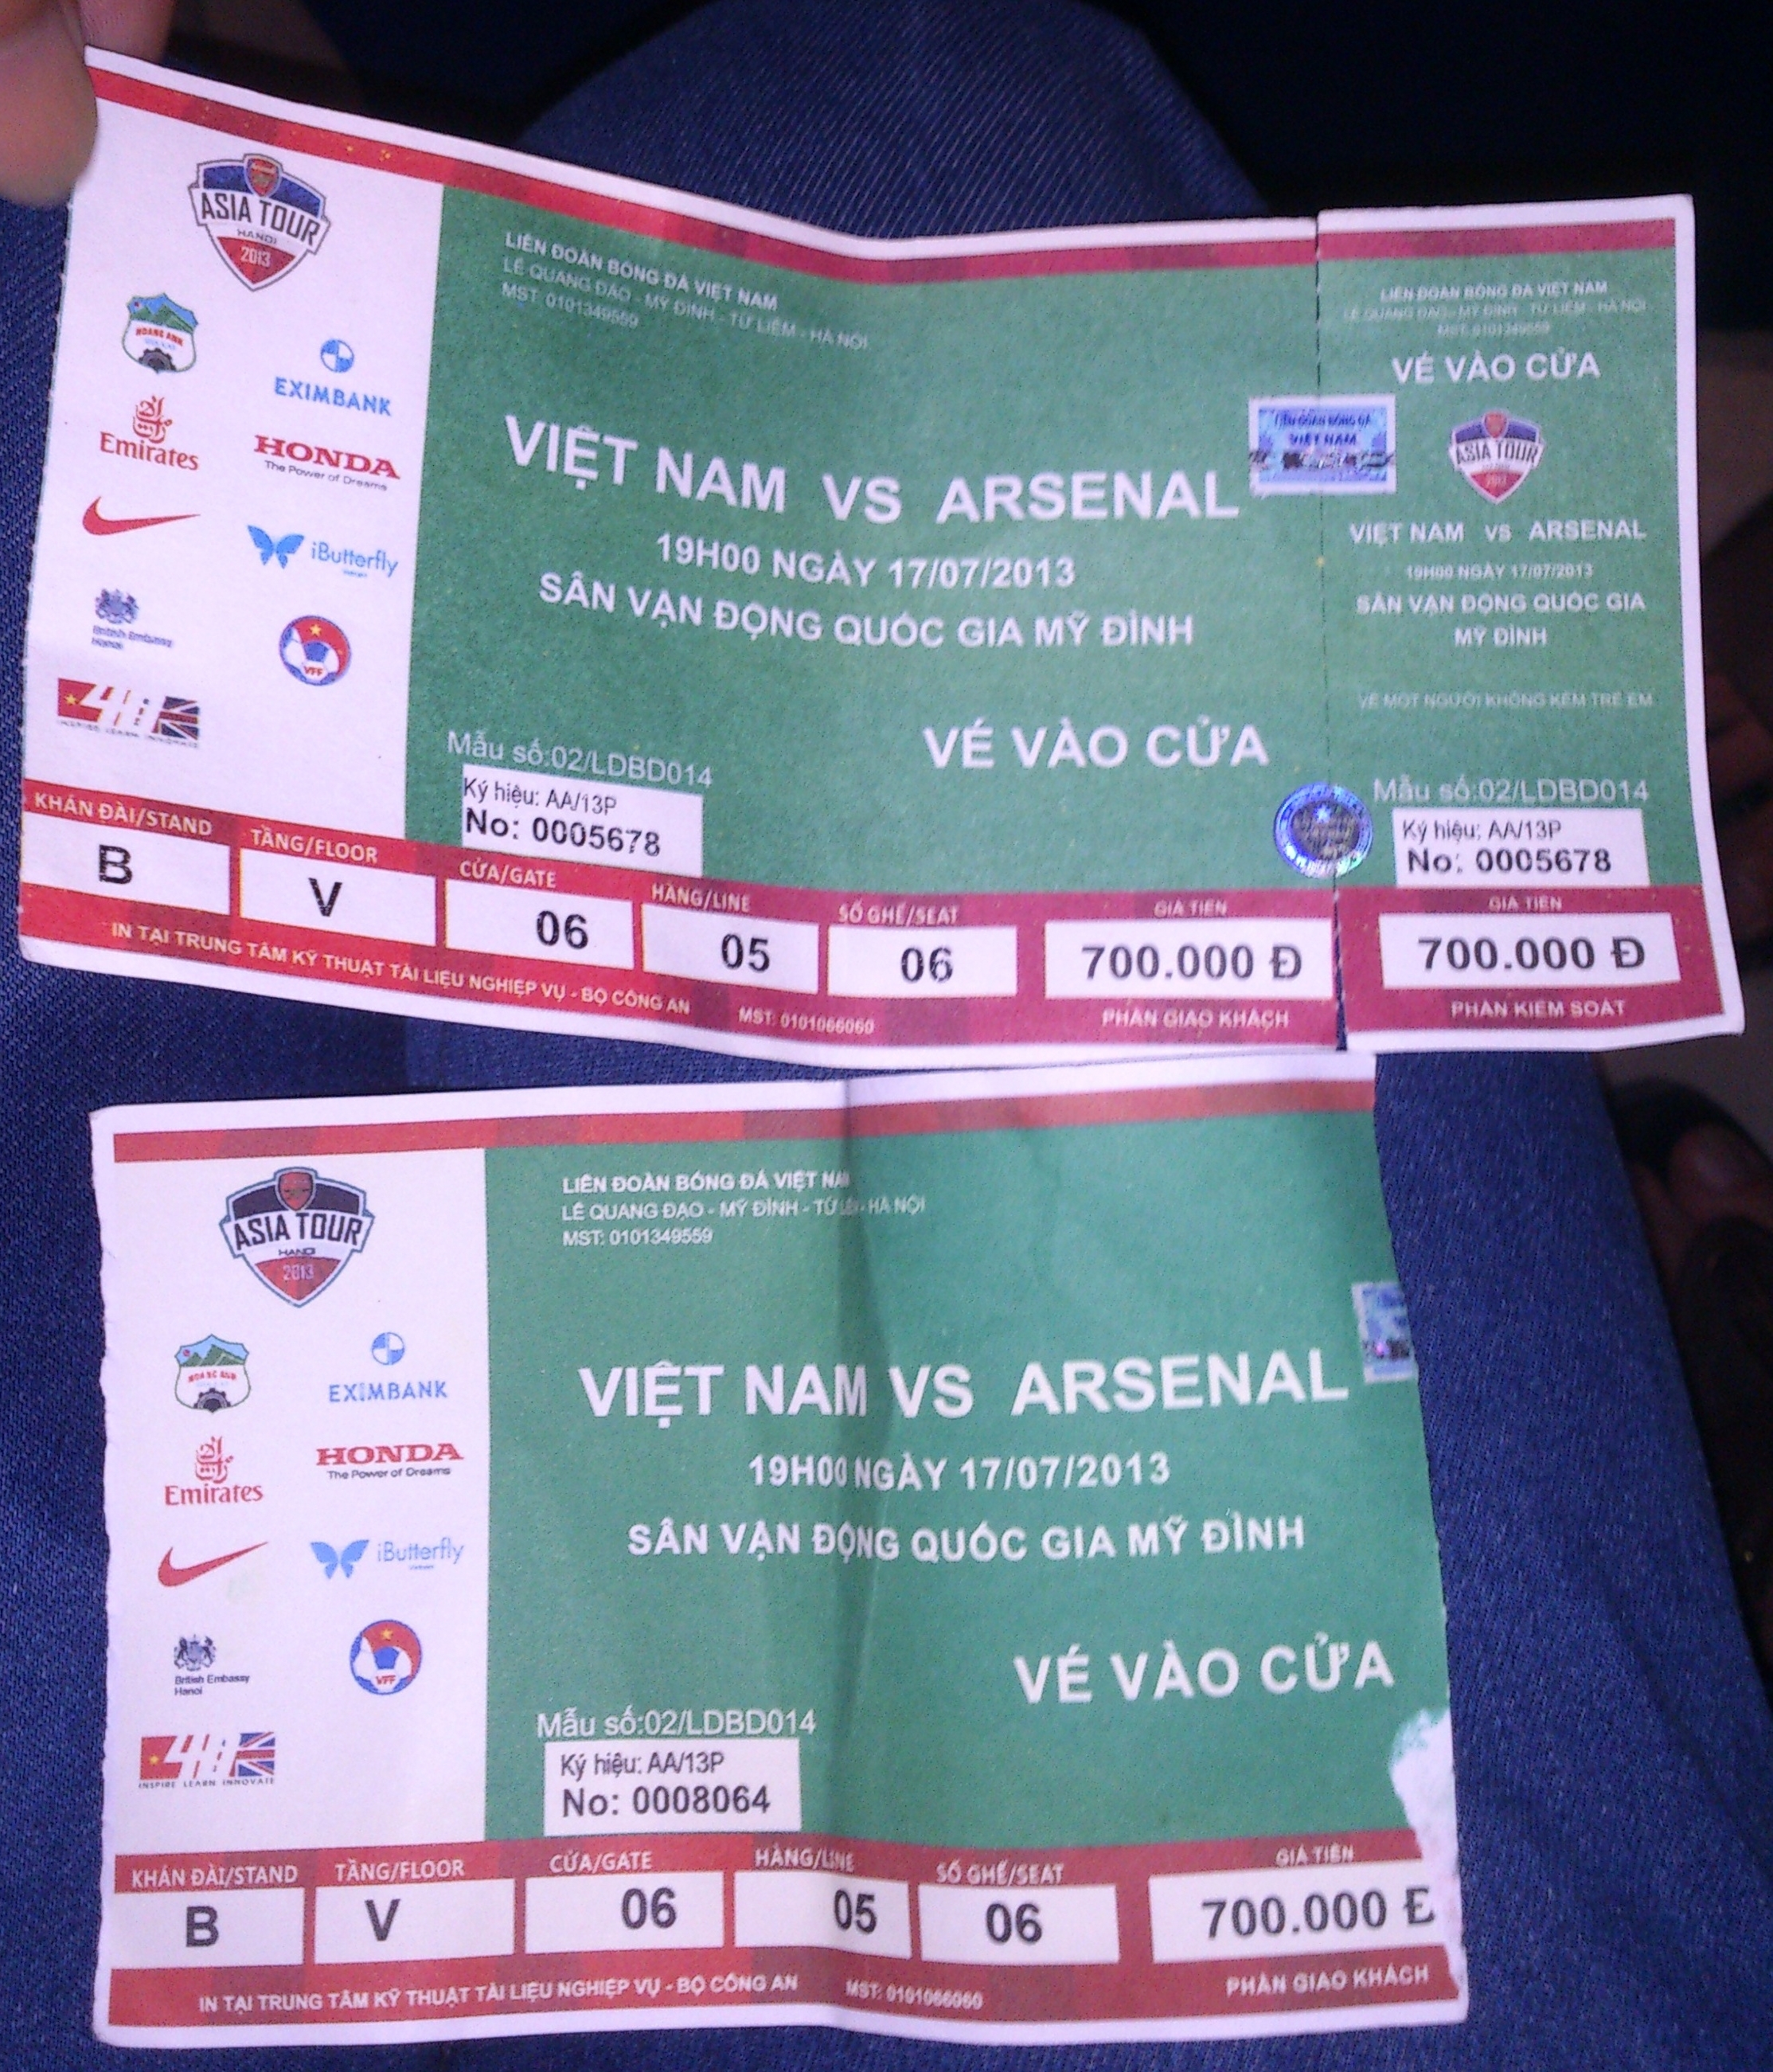 
	Xuất hiện vé giả trận Việt Nam vs Arsenal